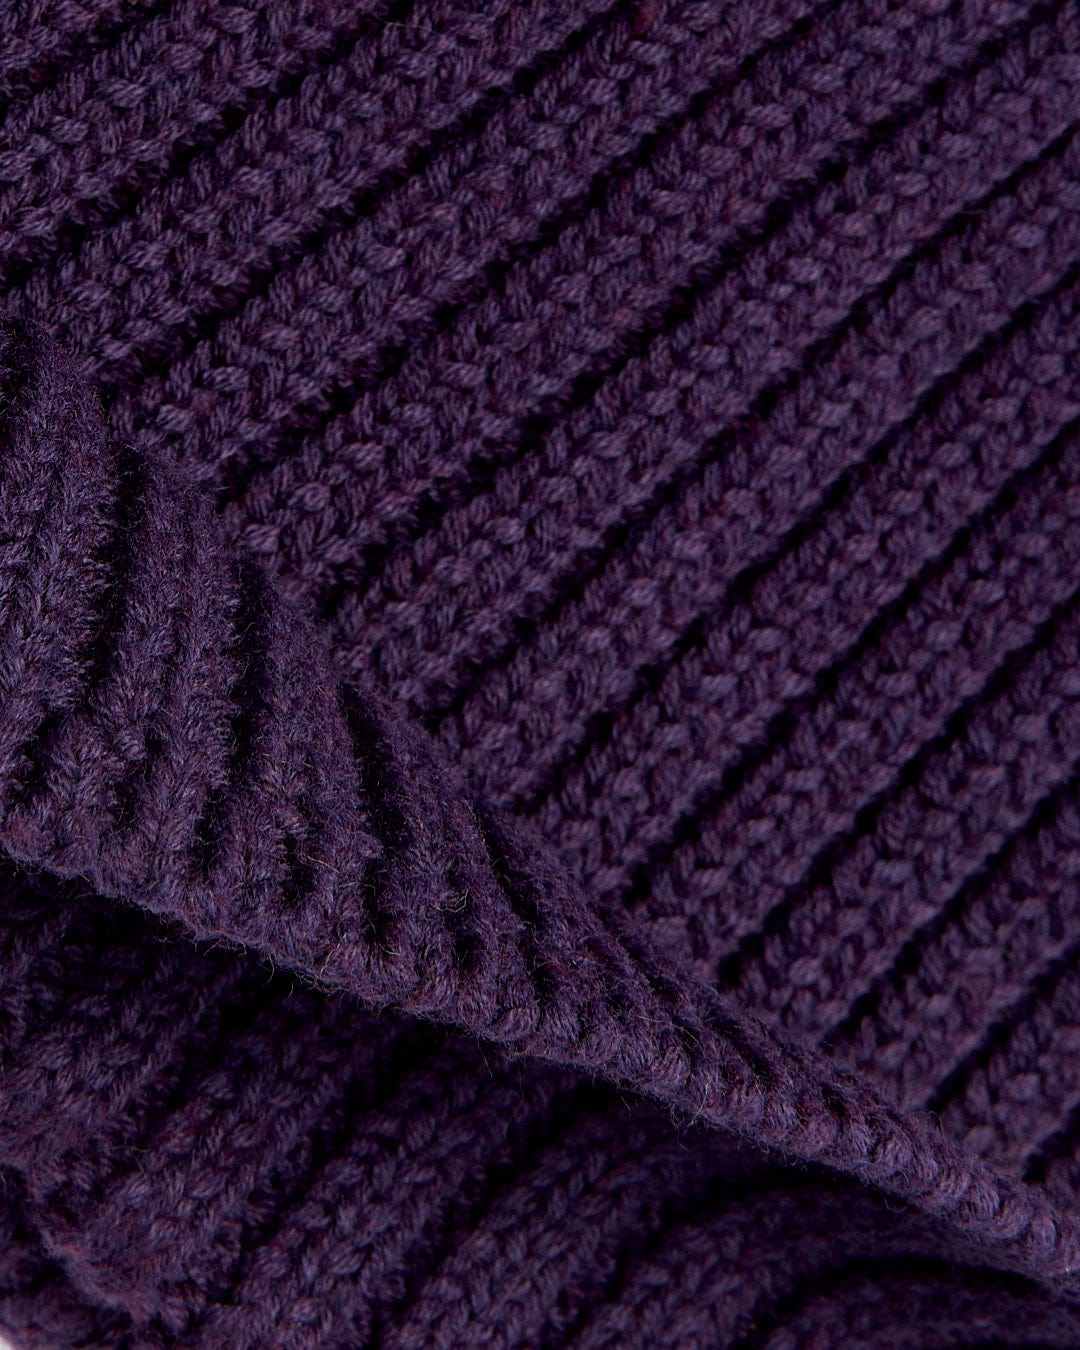 A close up image of a Saltrock Maine - Fisherman Beanie - Dark Purple.